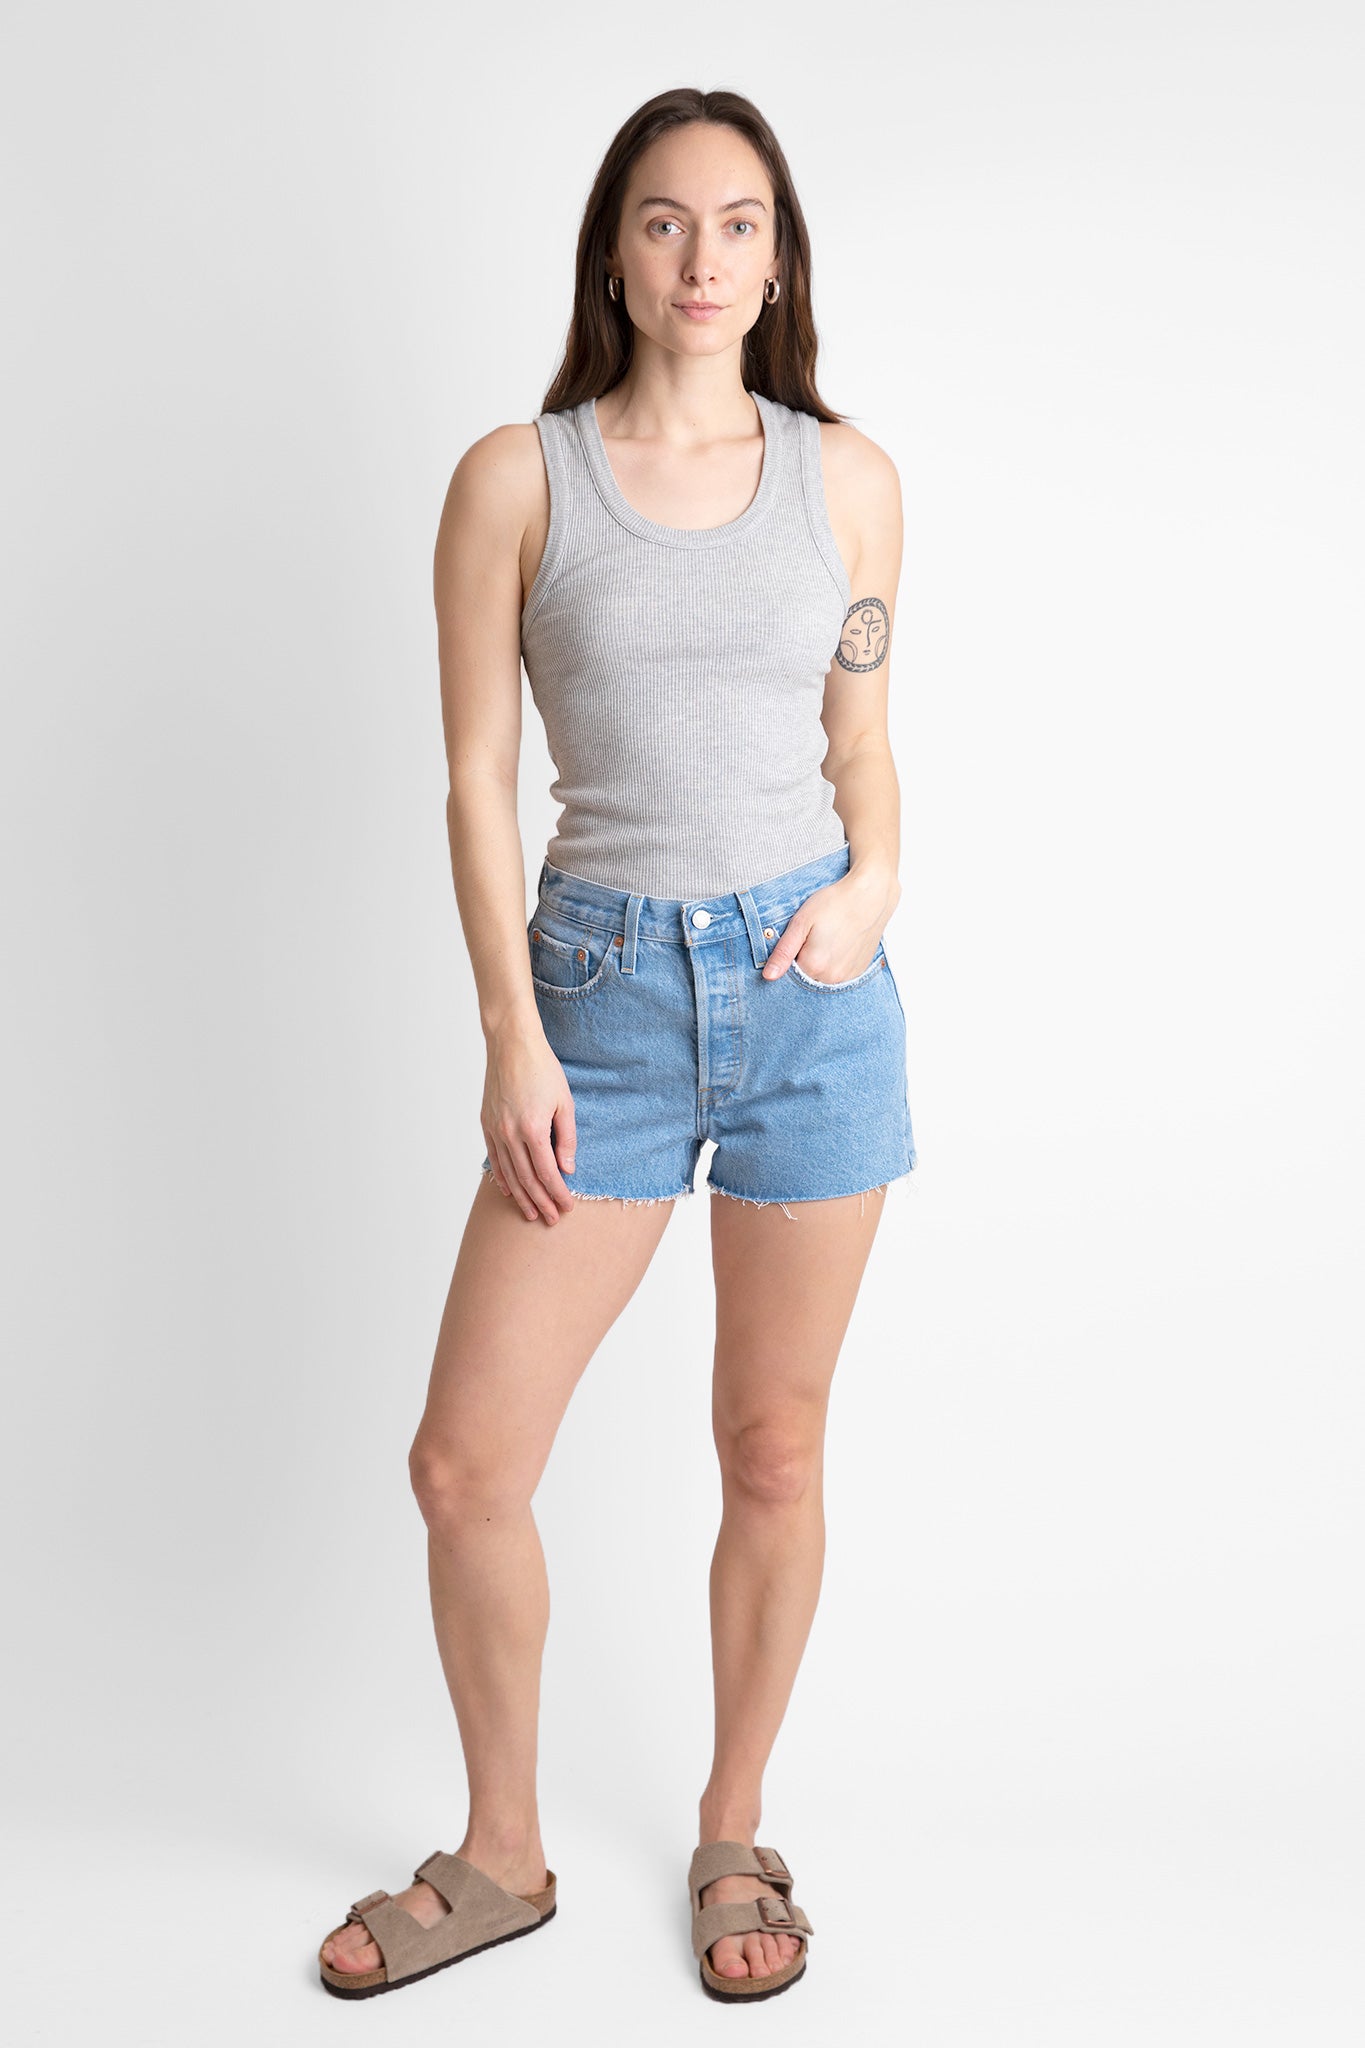 Levi's 501® Original Fit High-Rise Women's Jean Shorts - Ojai Top 24